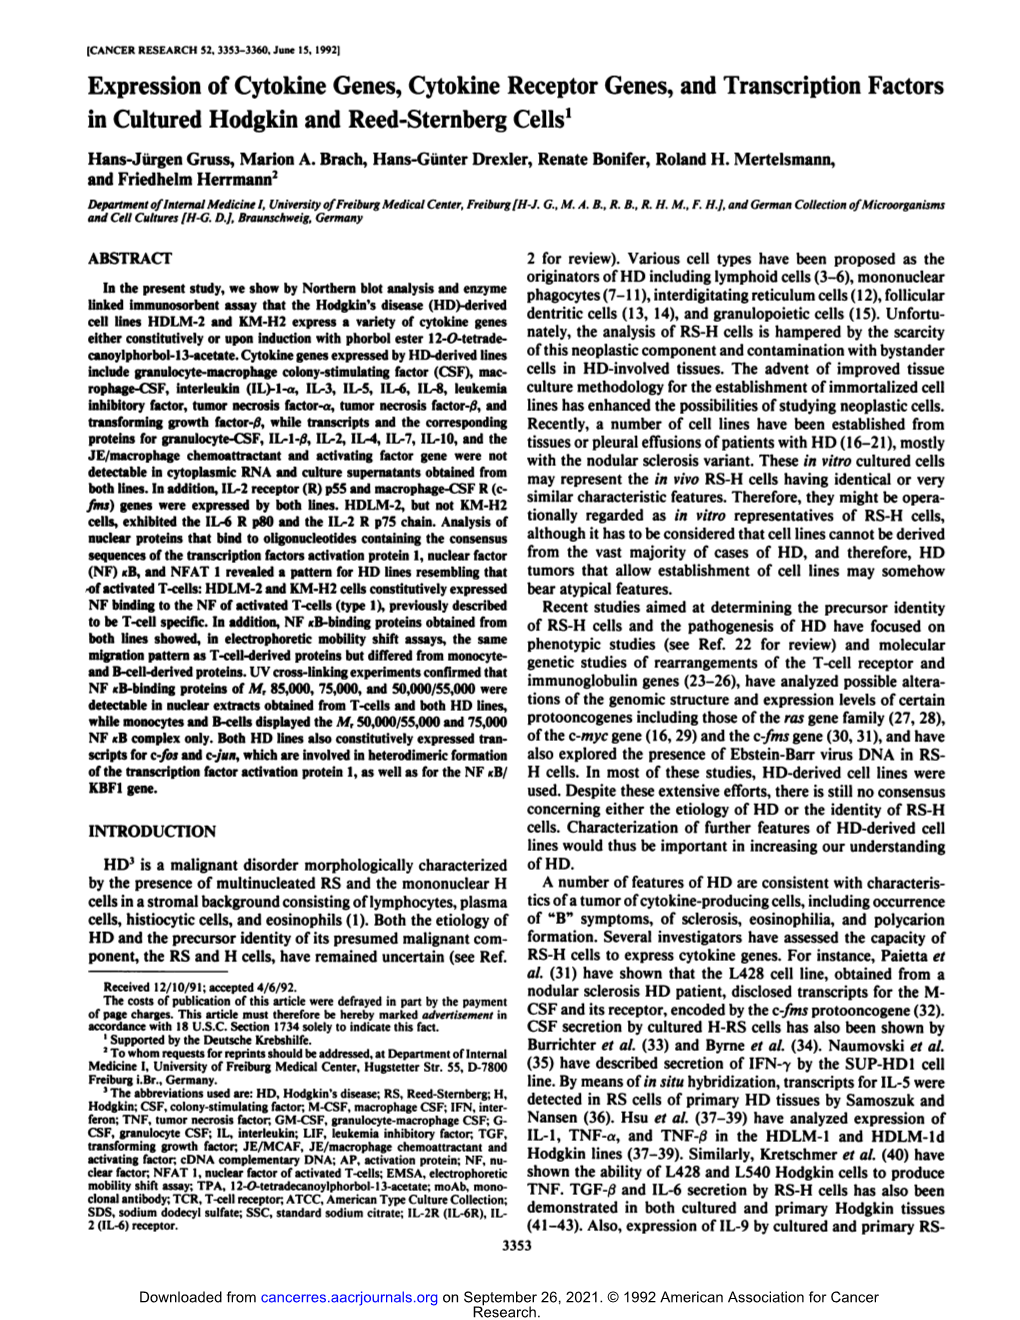 Expression of Cytokine Genes, Cytokine Receptor Genes, and Transcription Factors in Cultured Hodgkin and Reed-Sternberg Cells1